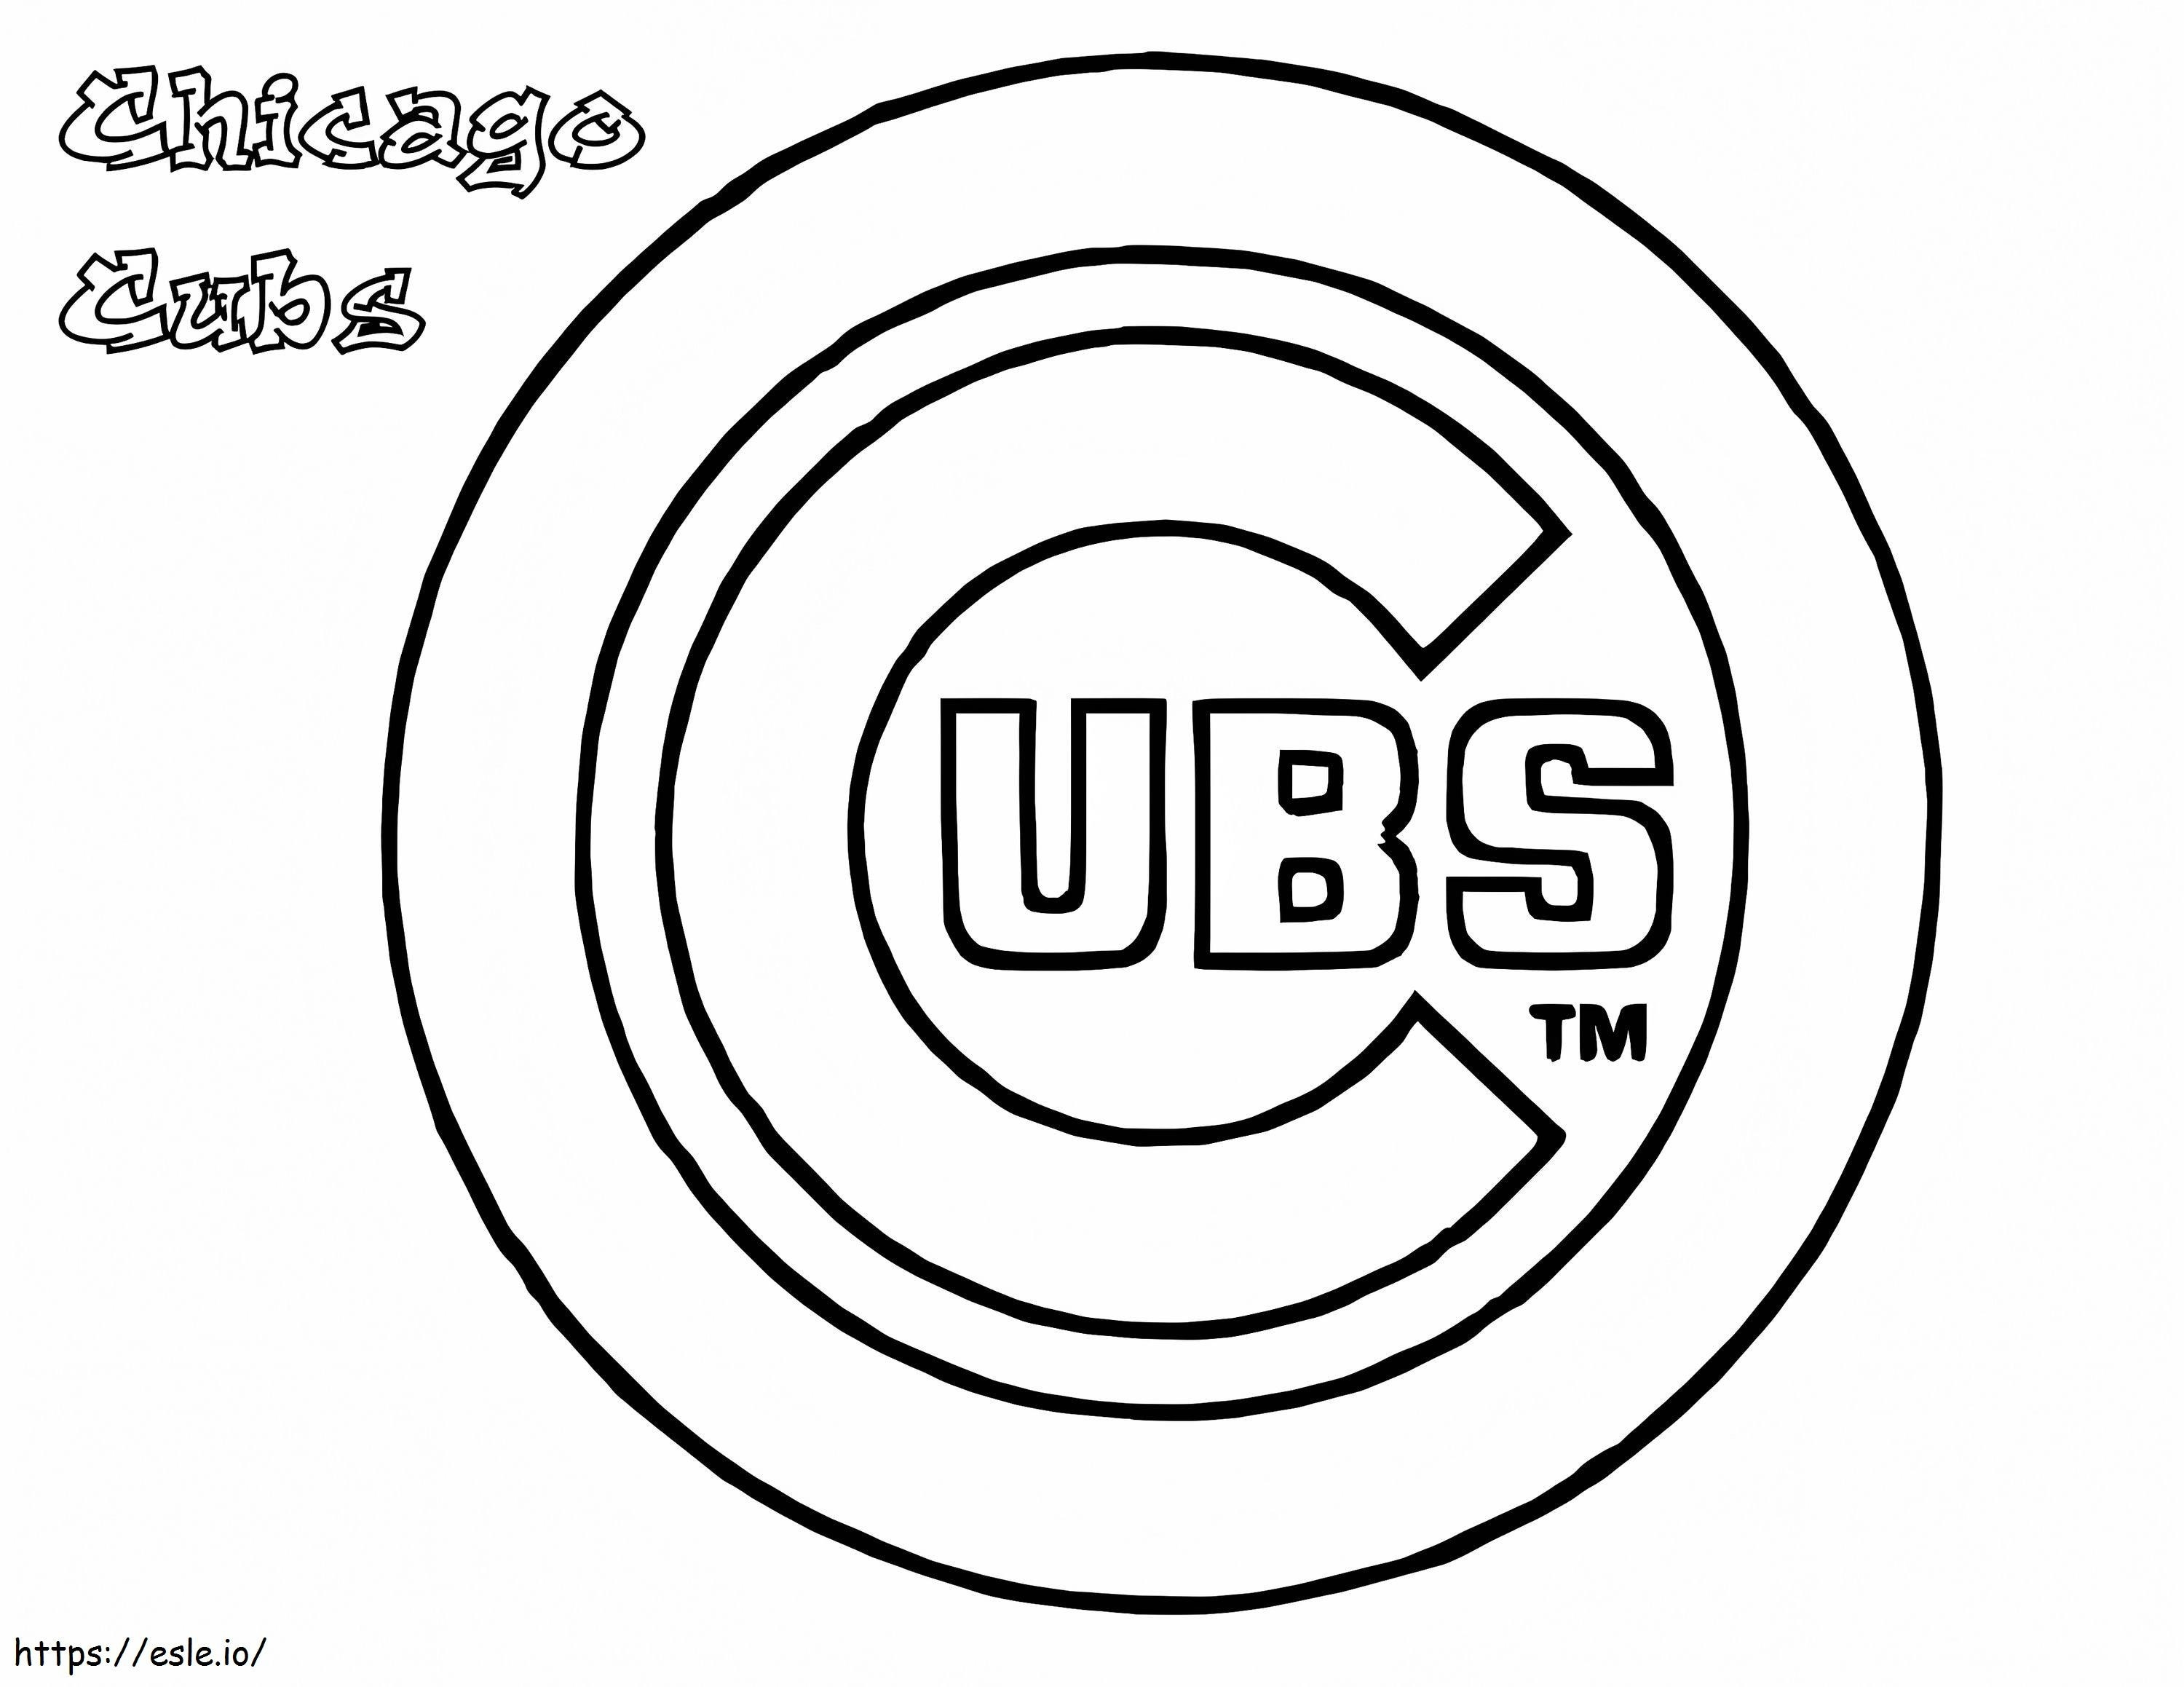 Chicago Cubs 1 para colorir